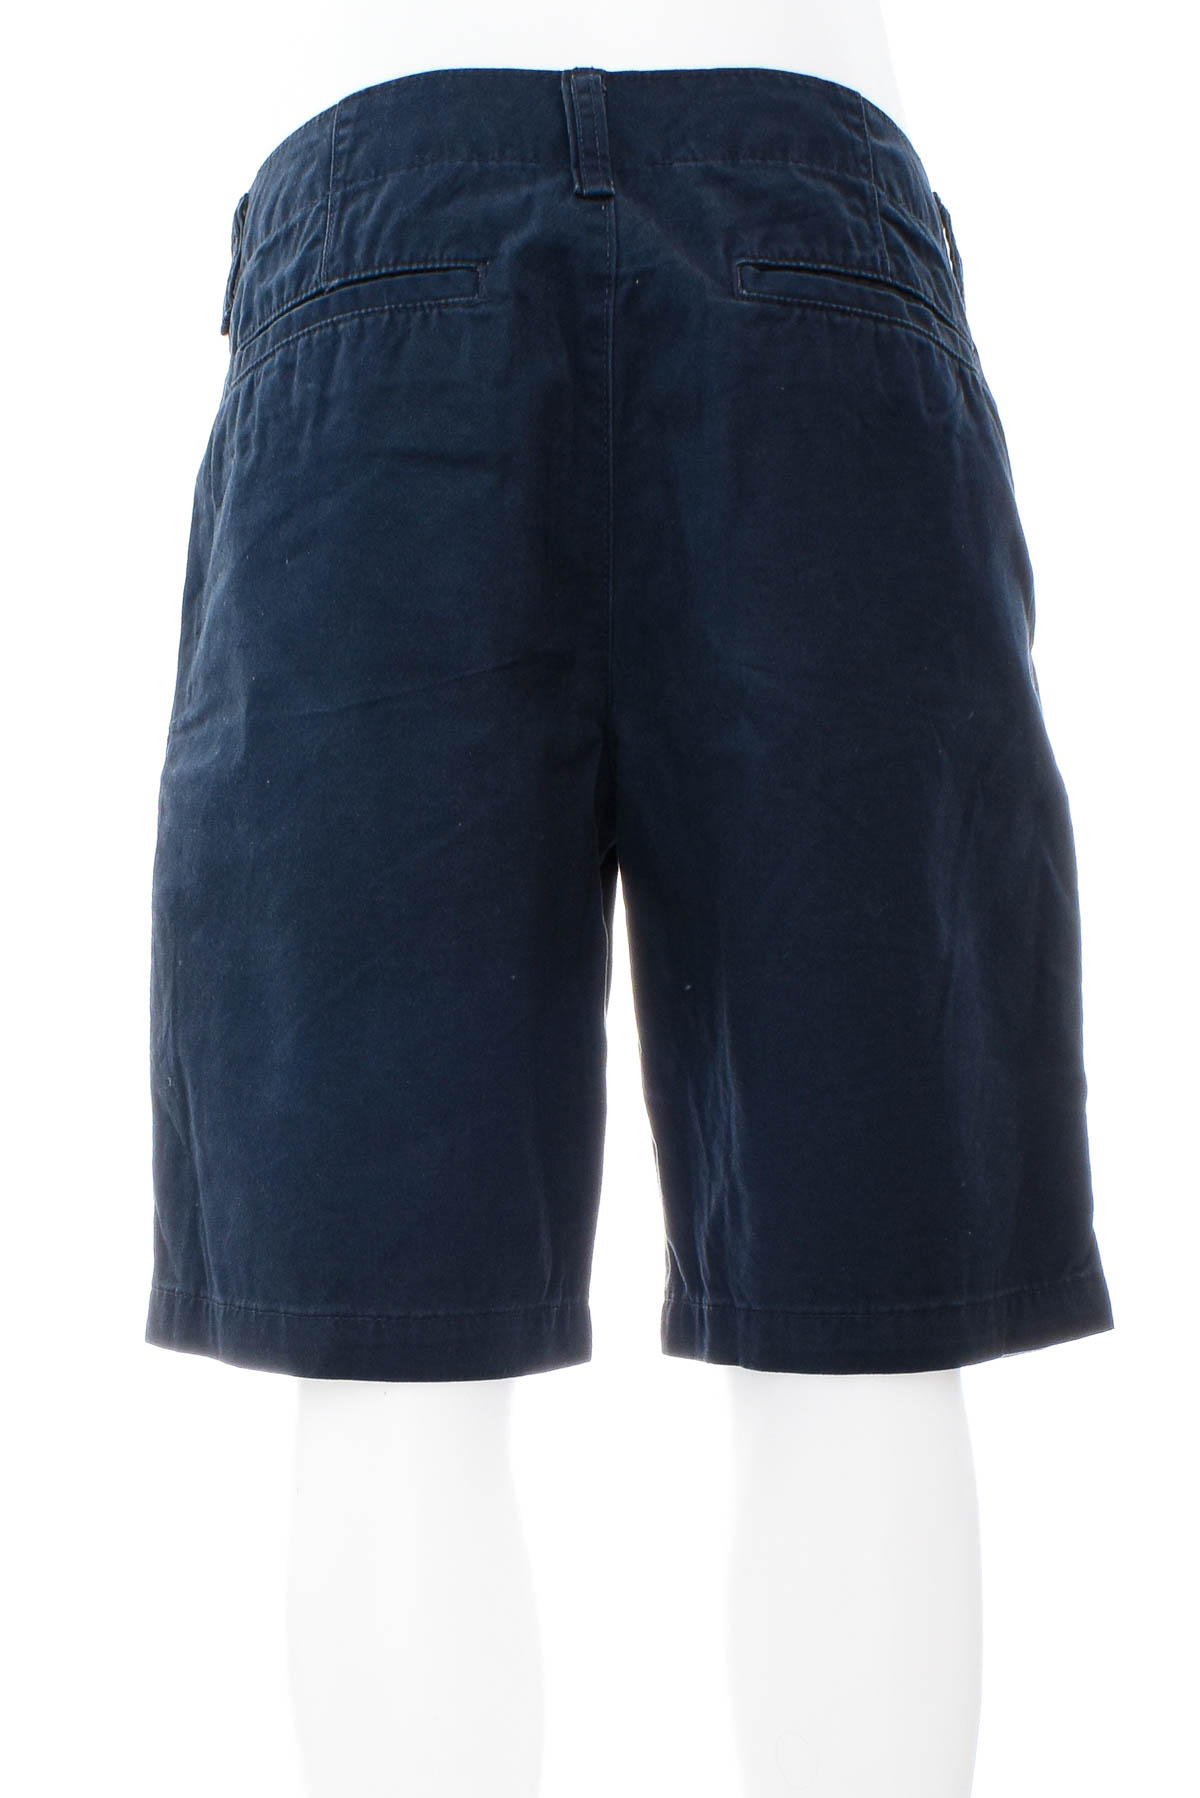 Men's shorts - OLD NAVY - 1